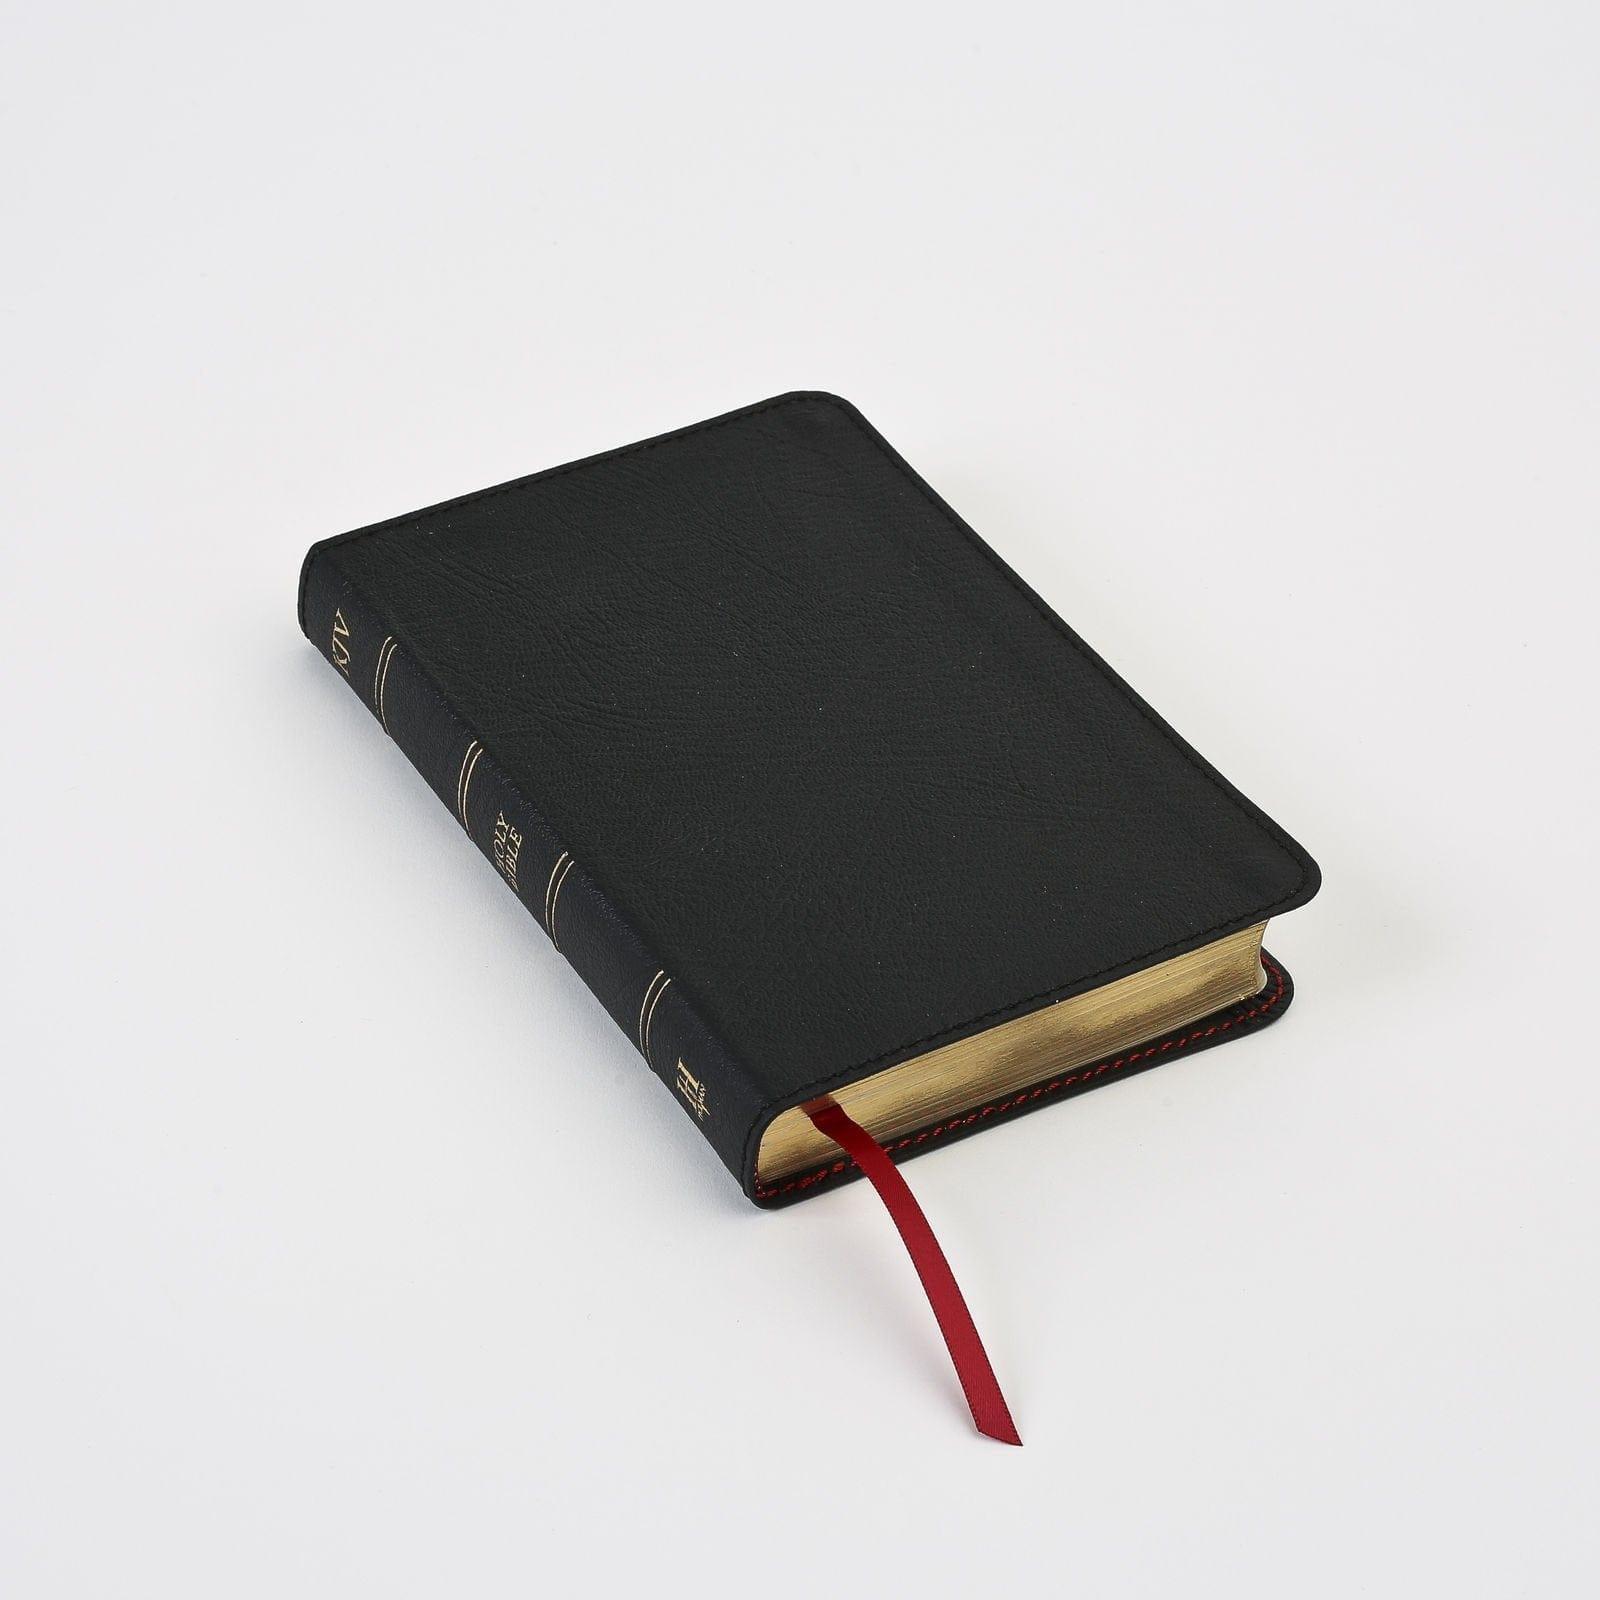 Minister's Pocket Bible: KJV Edition, Black Genuine Leather - Pura Vida Books